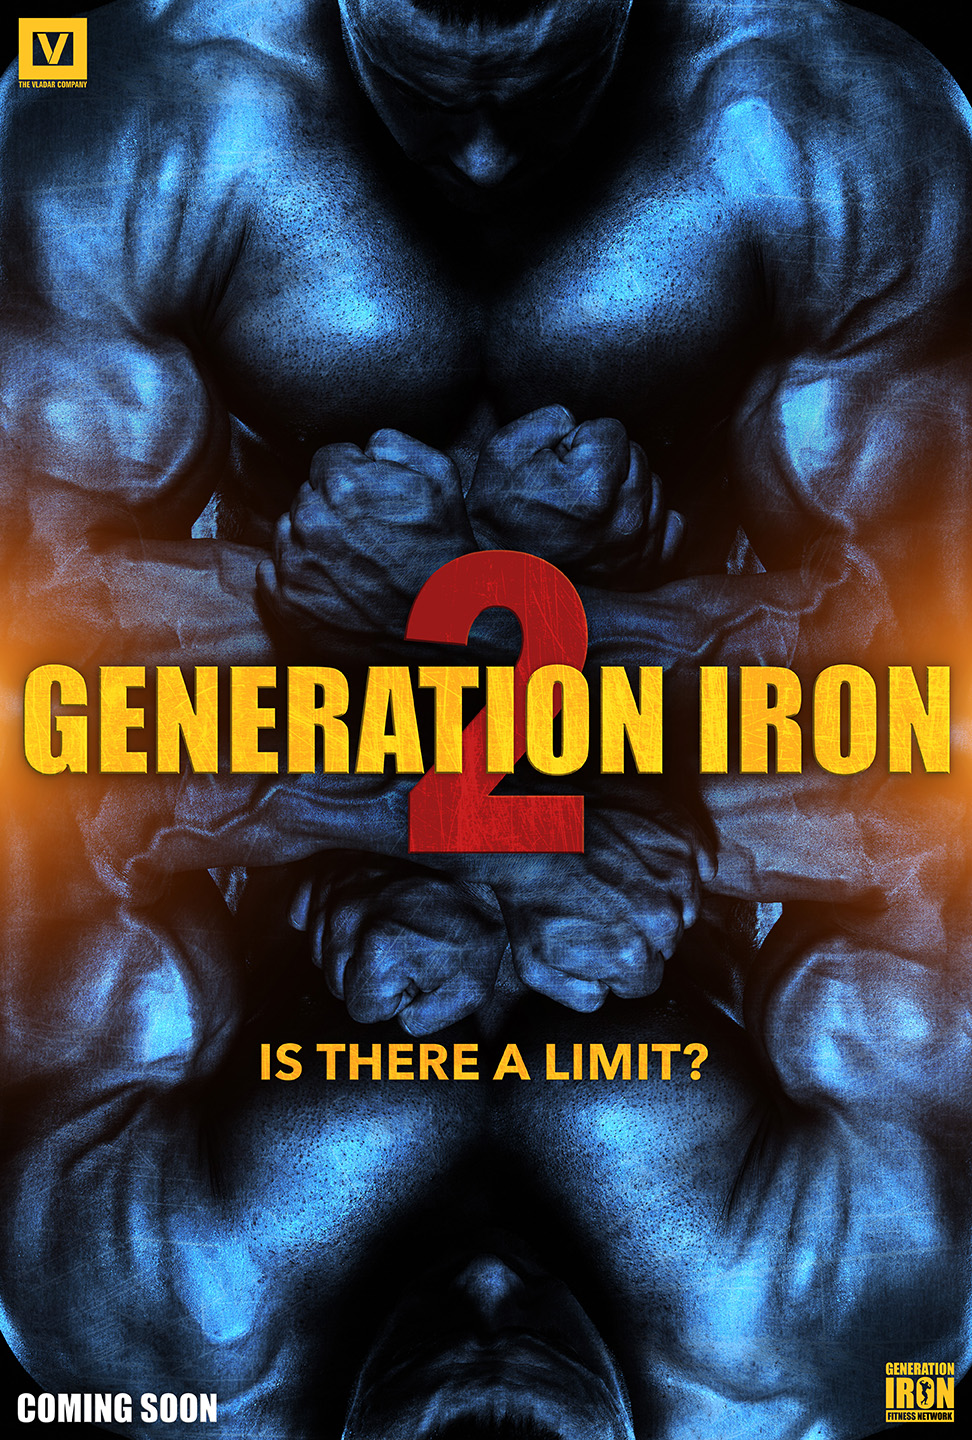 Generation Iron 2 Teaser Poster